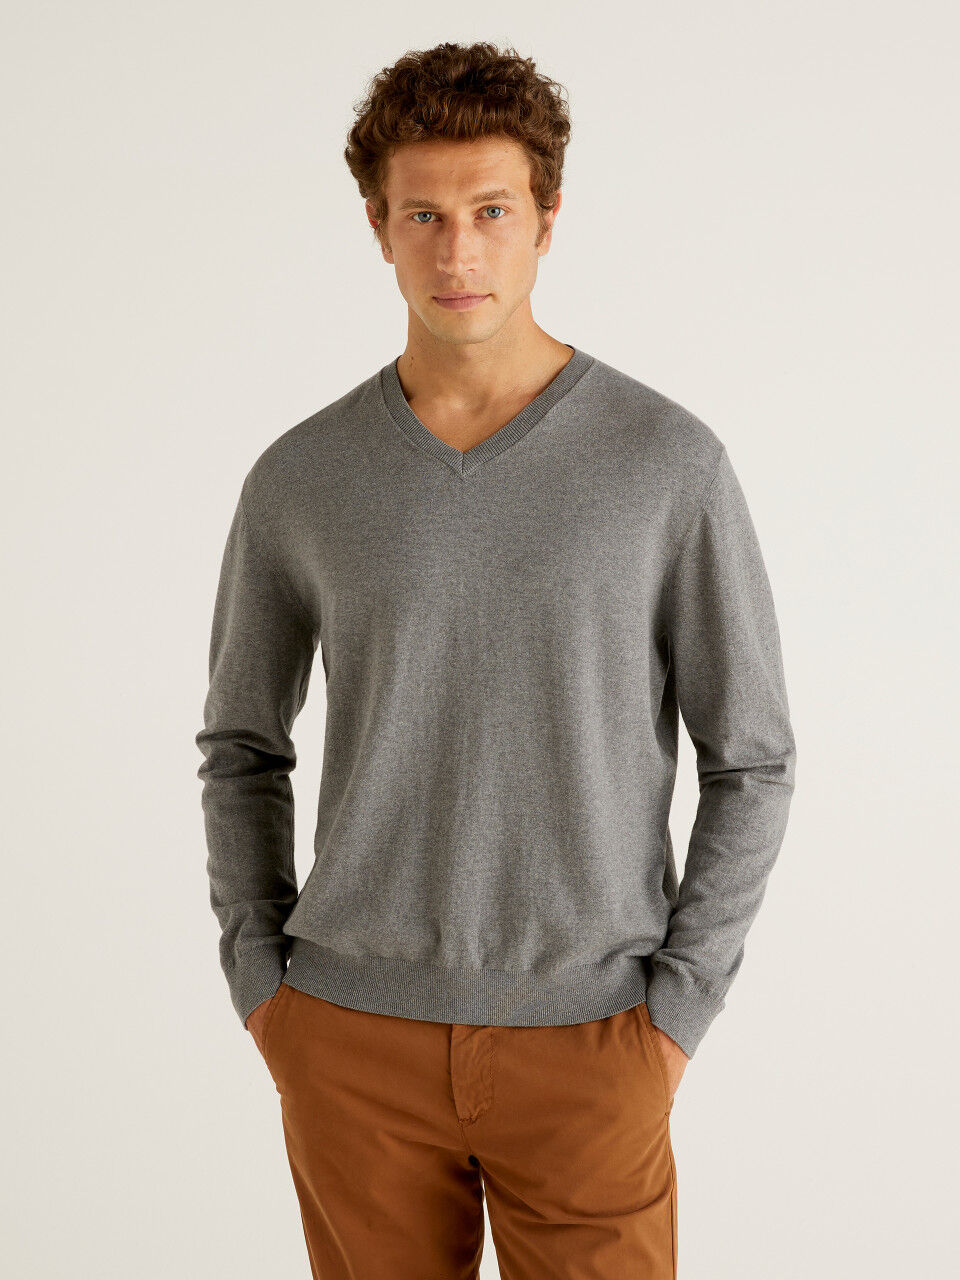 V-neck sweater in lightweight cotton blend